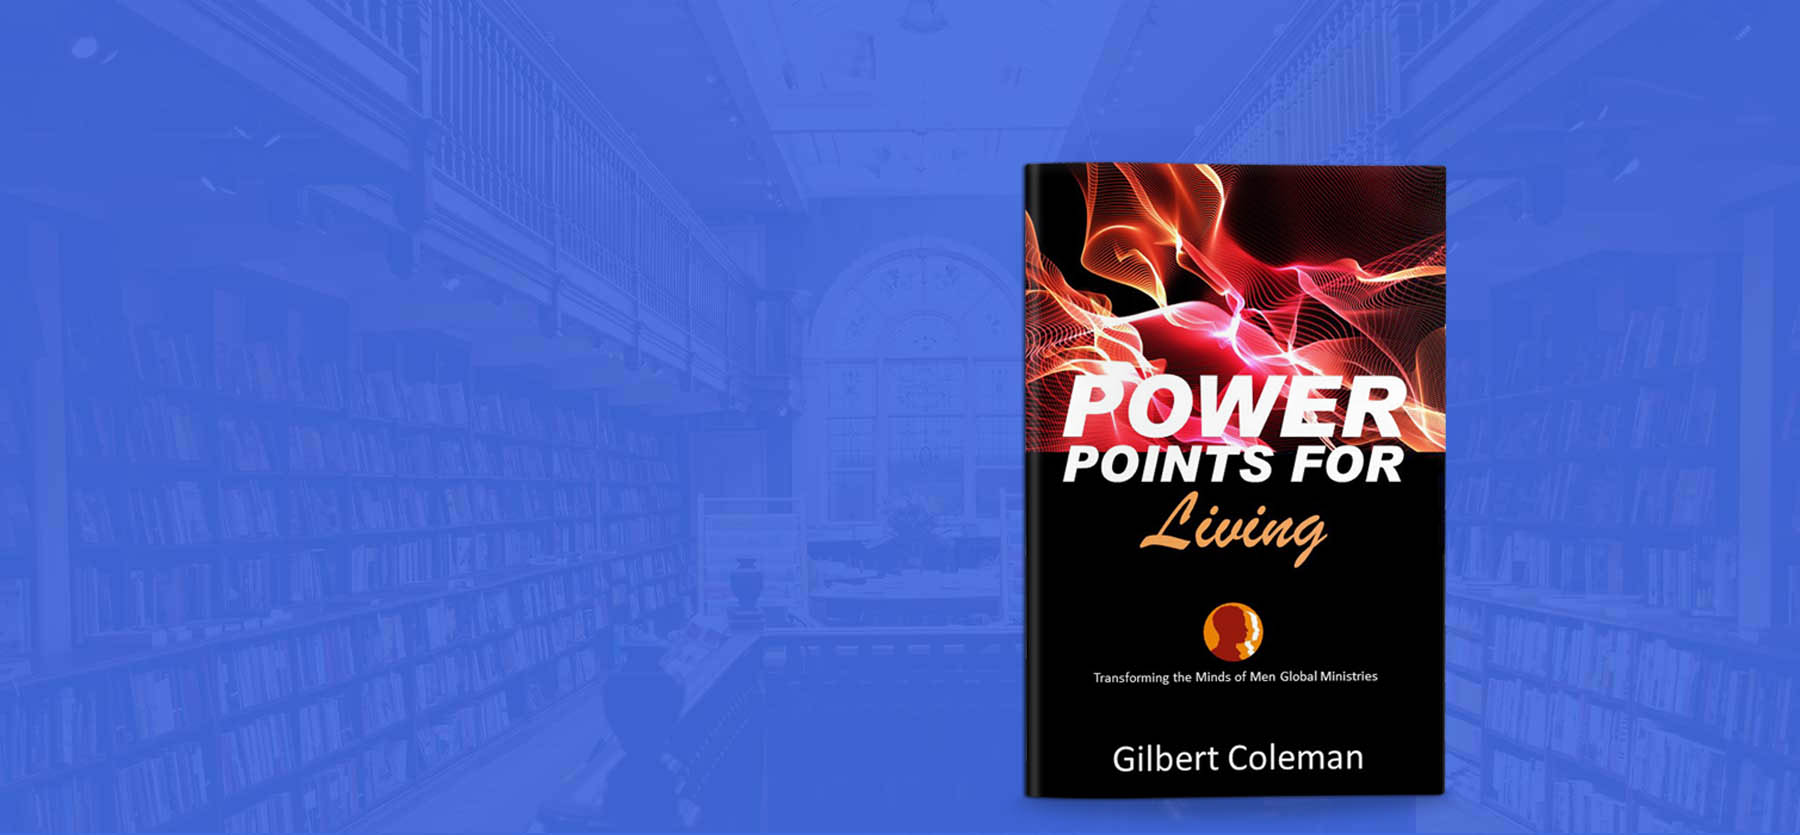 Power PointsPower PointsFor Living2019 - 2020